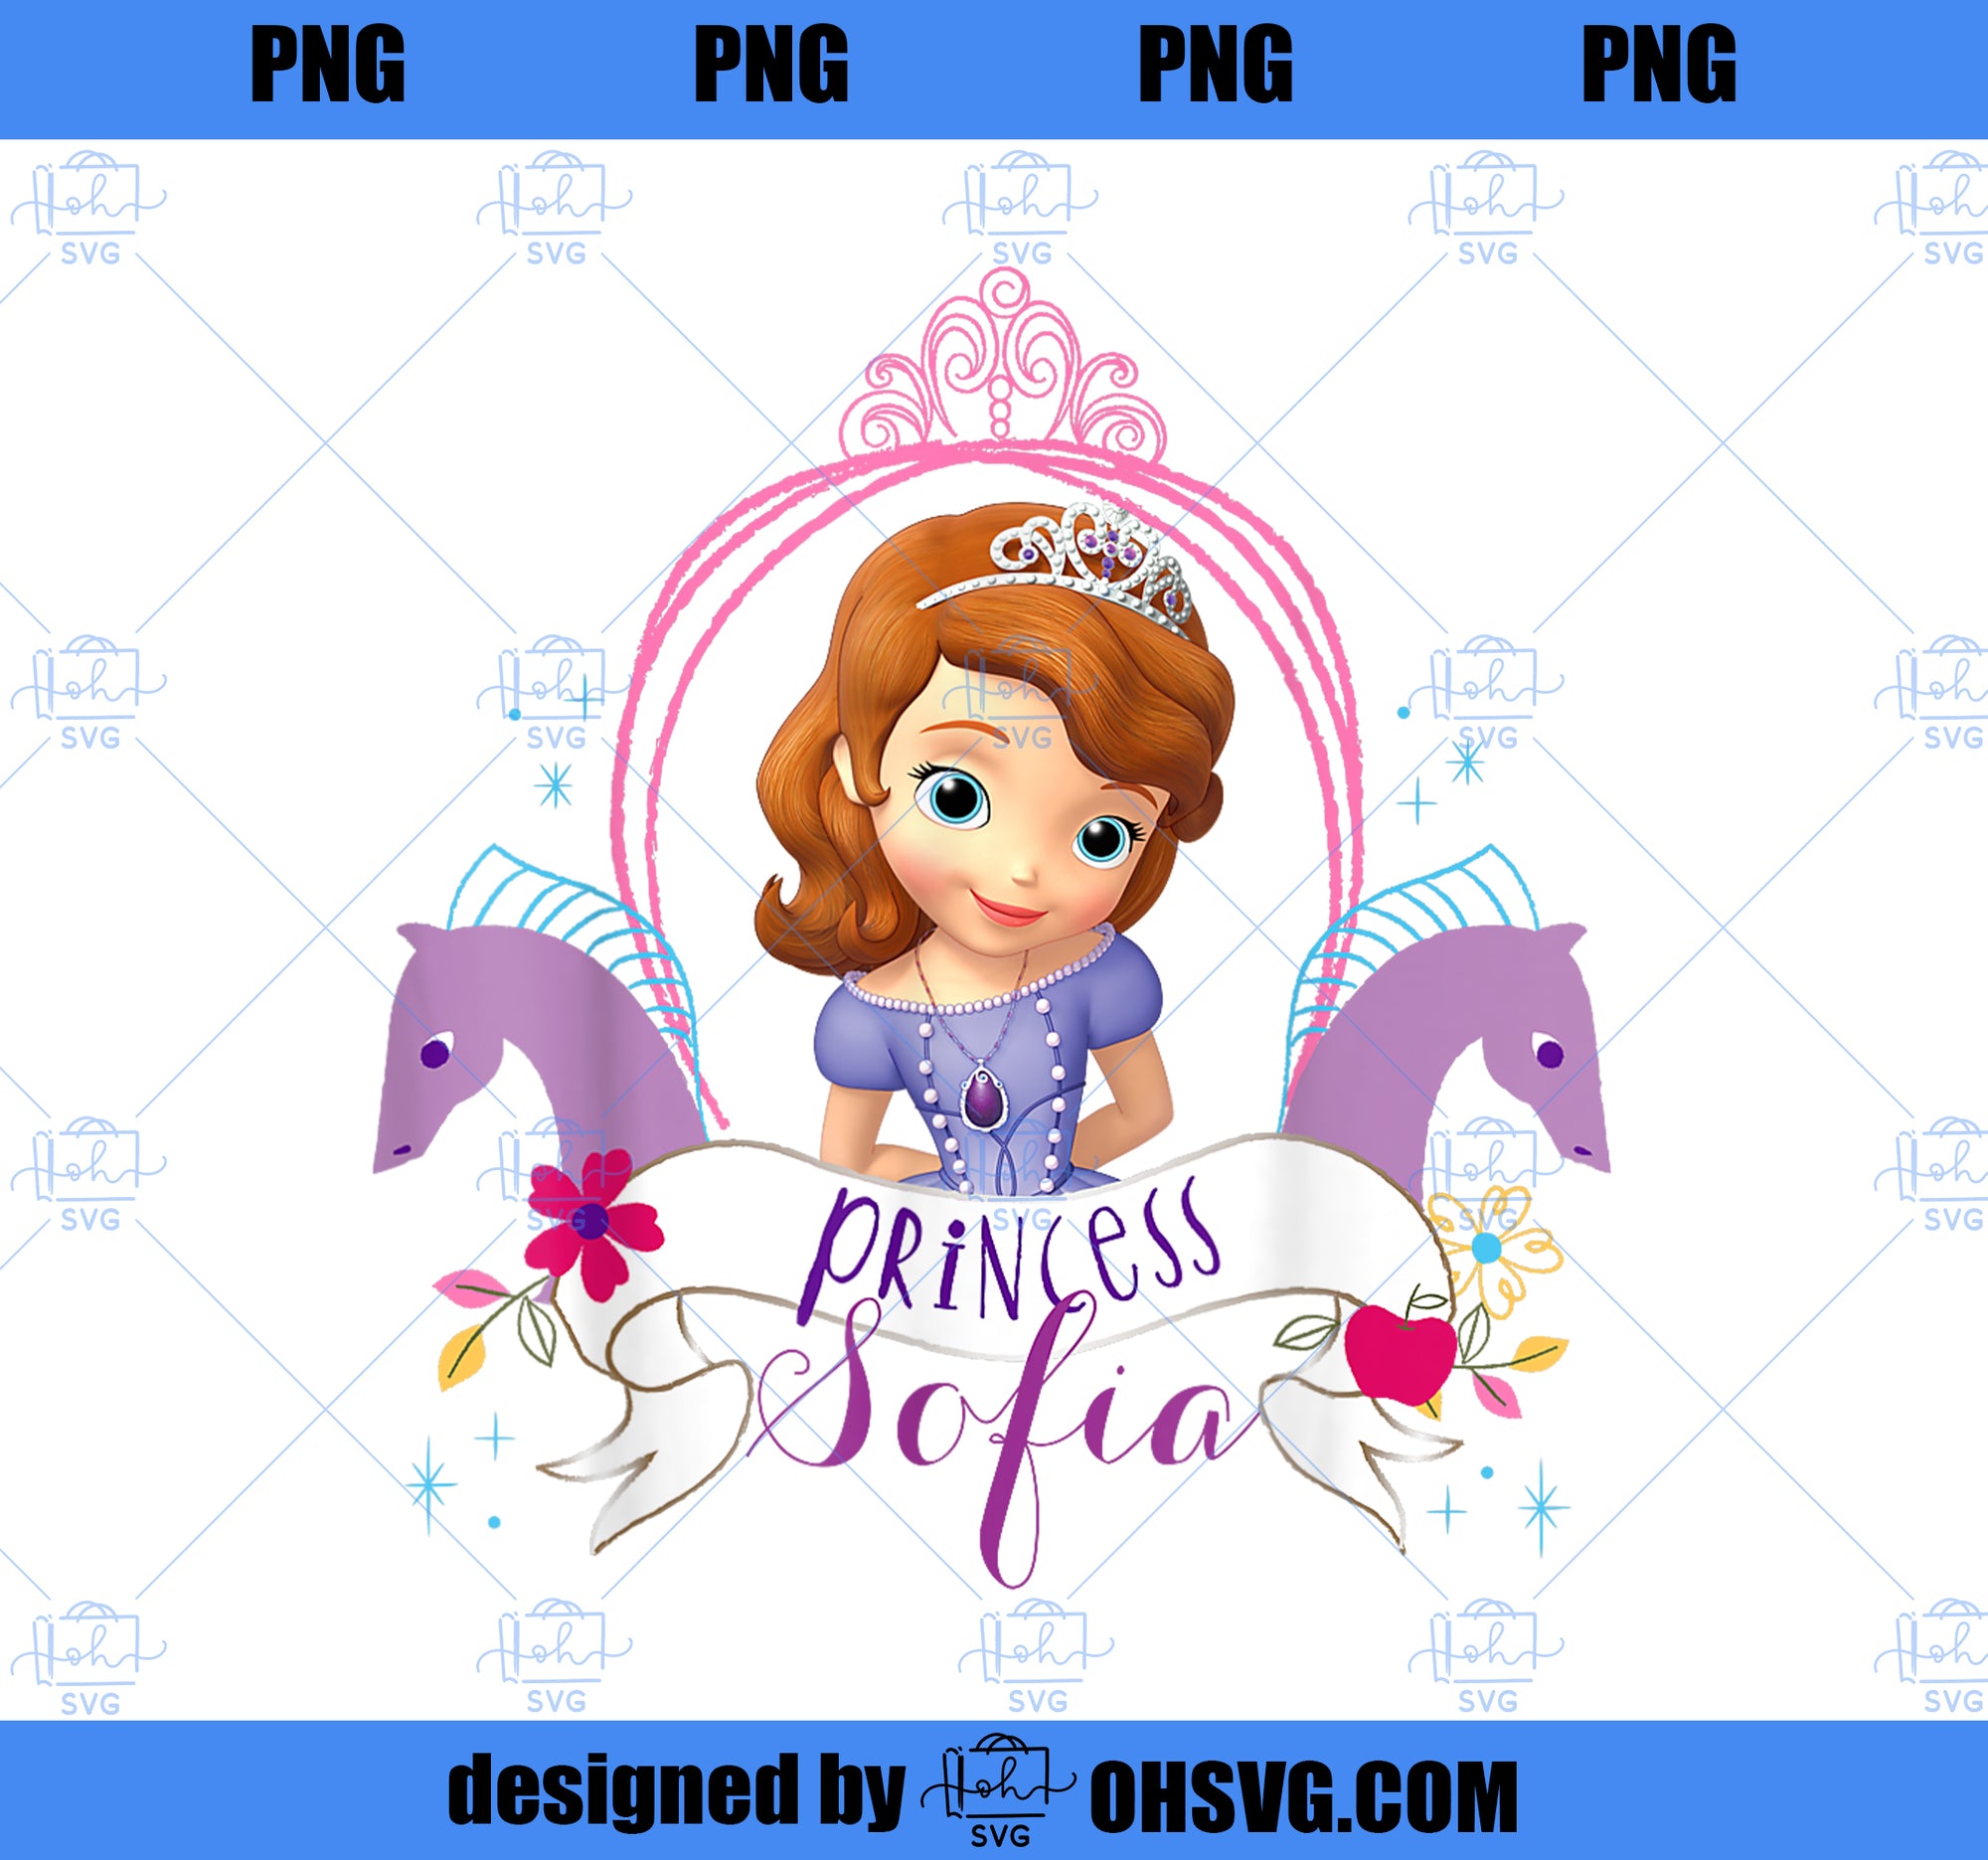 Disney Sleeping Beauty Princess Aurora in Pink Dress PNG, Disney PNG, Princess PNG